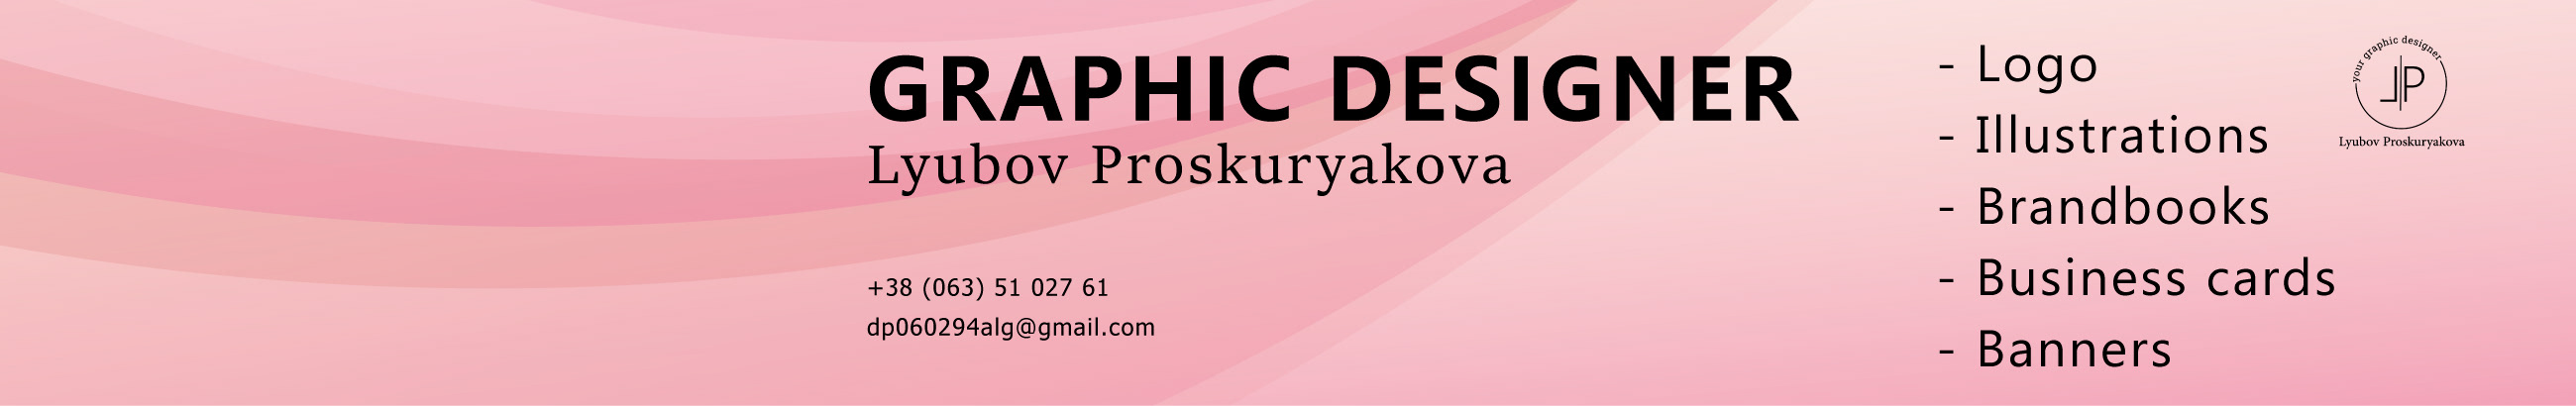 Lyubov Proskuryakova profil başlığı